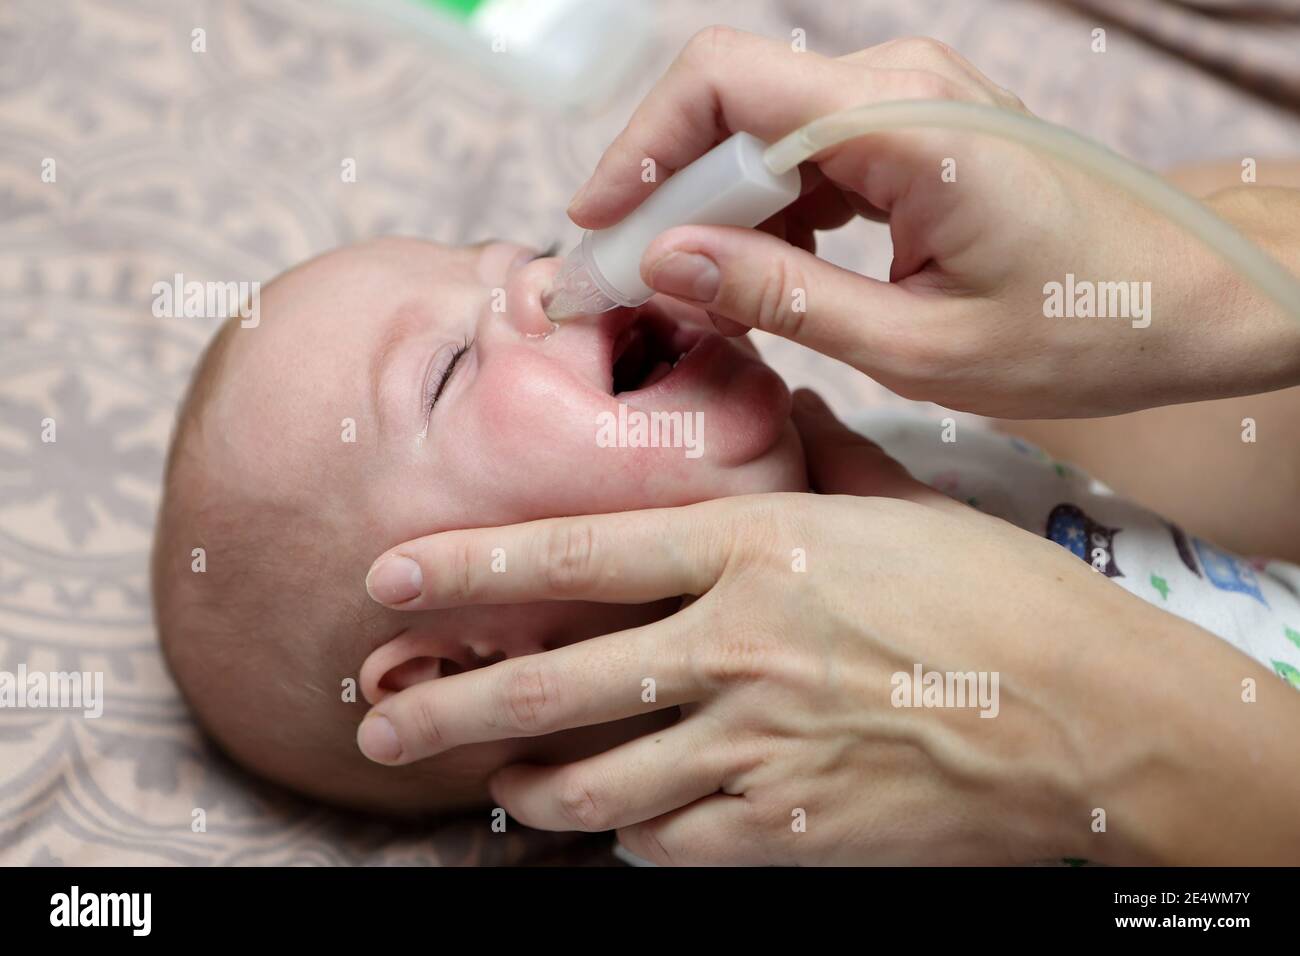 Mother using baby's nasal aspirator at home Stock Photo